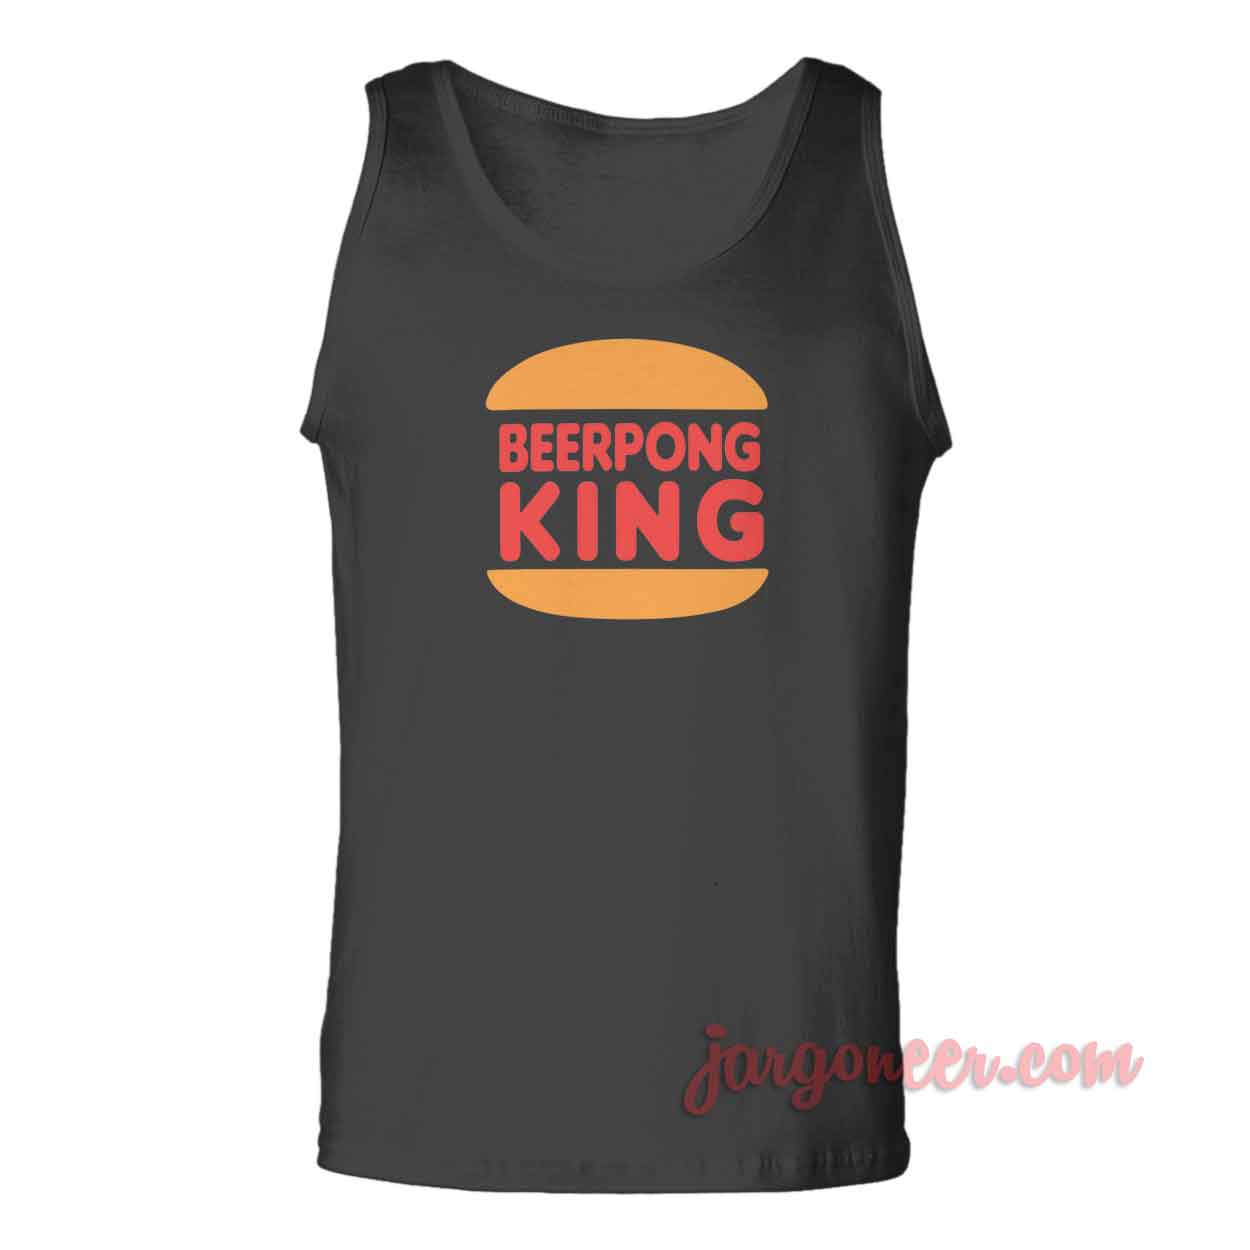 Beerpong King - Shop Unique Graphic Cool Shirt Designs